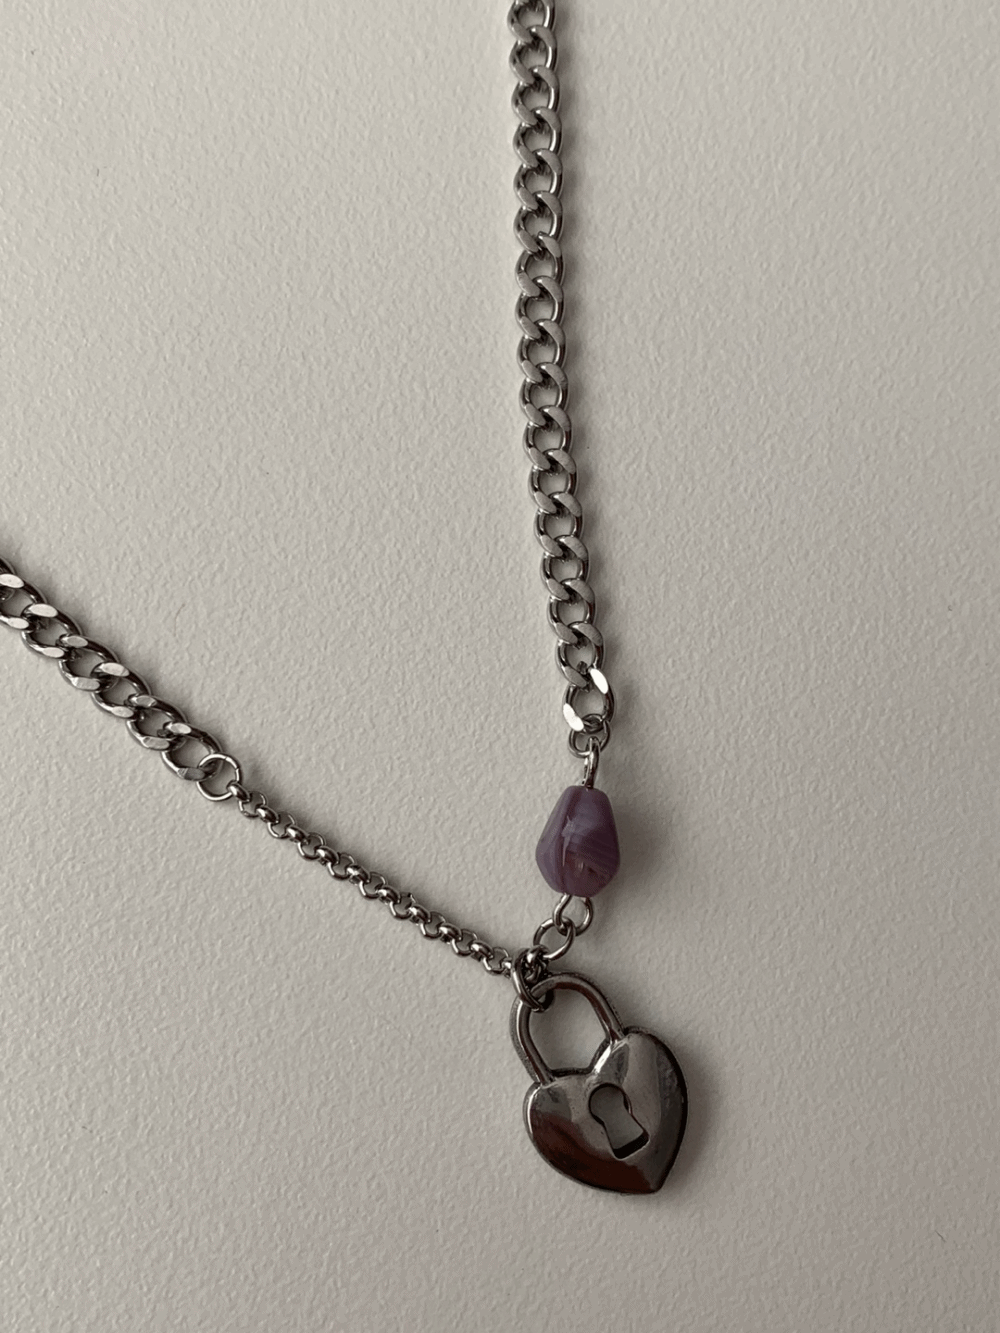 [Acc] Lavender key chain necklace / one color